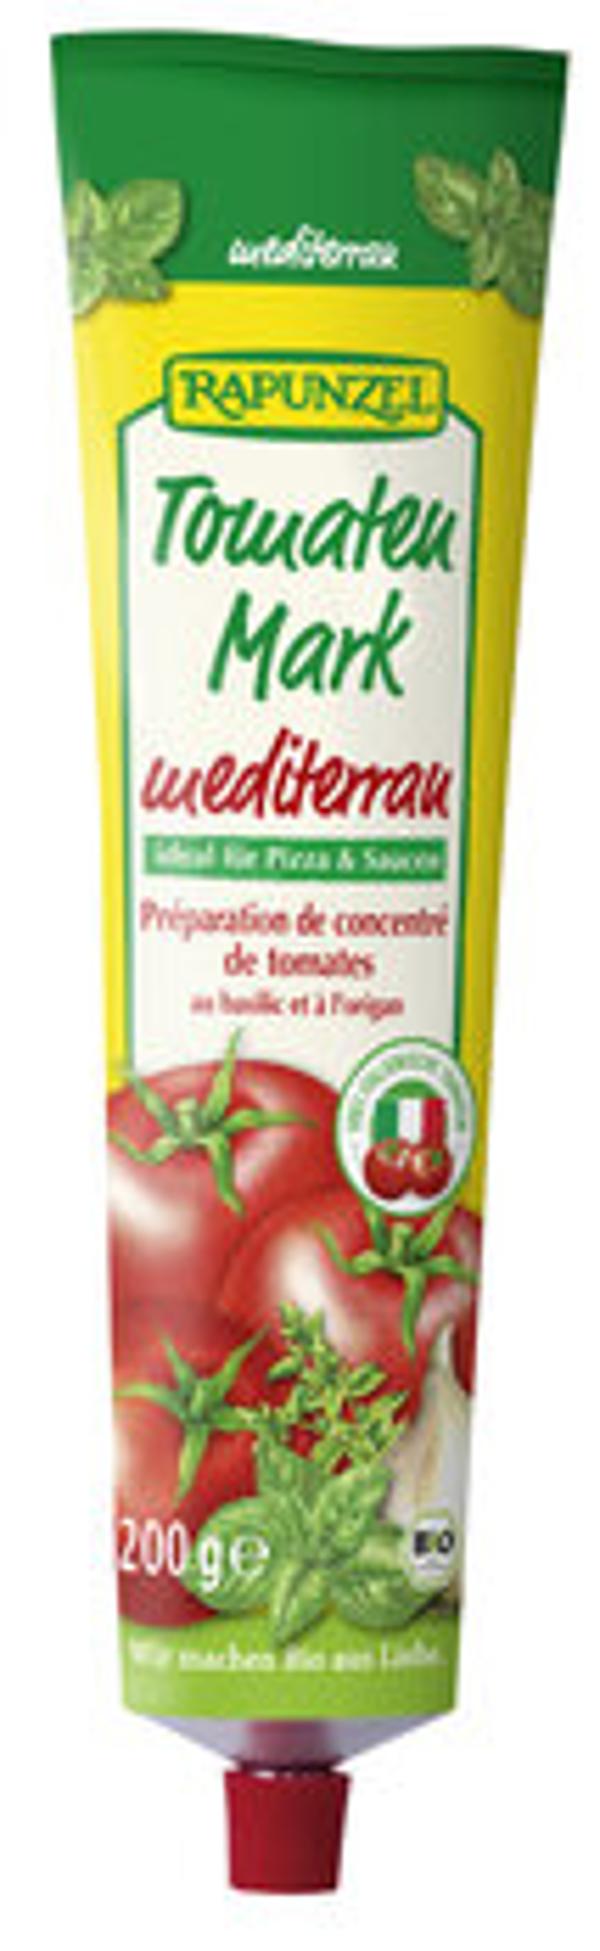 Produktfoto zu Tomatenmark mediterran 200g